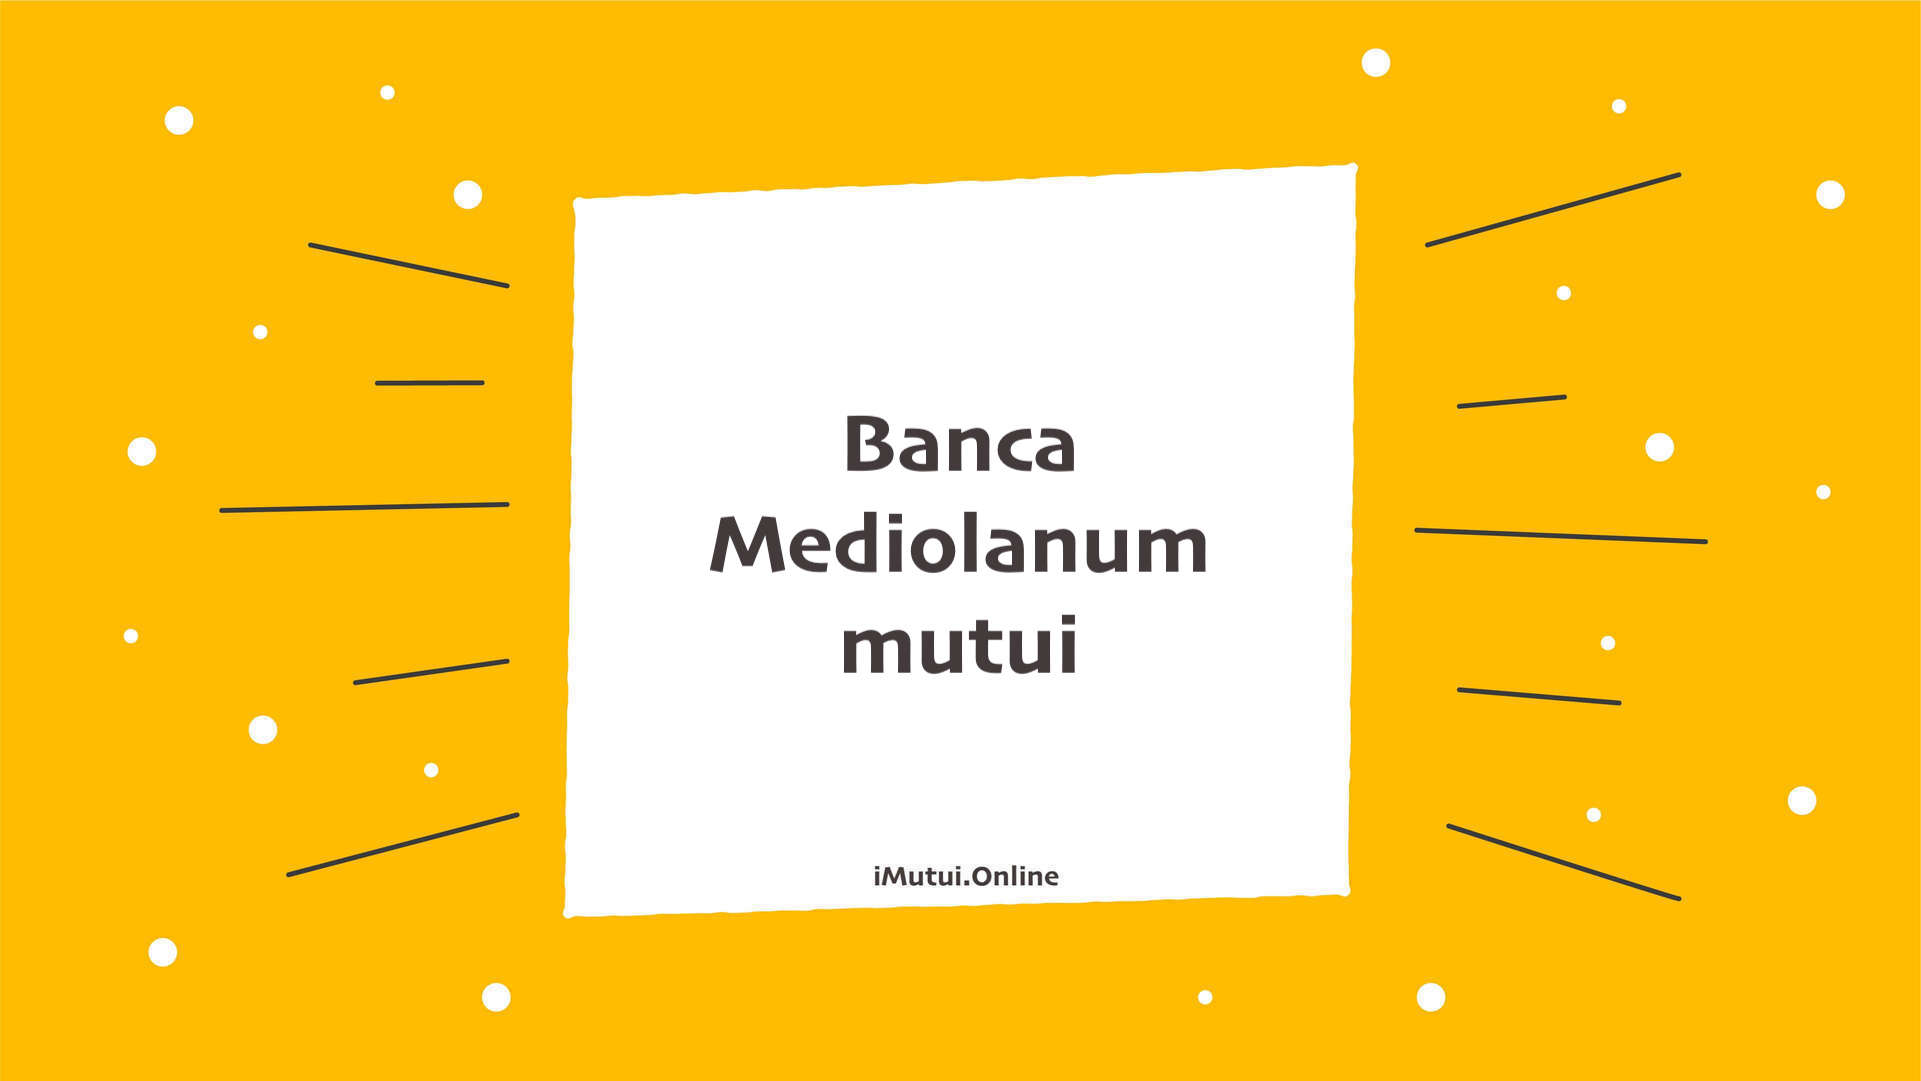 Banca Mediolanum mutui